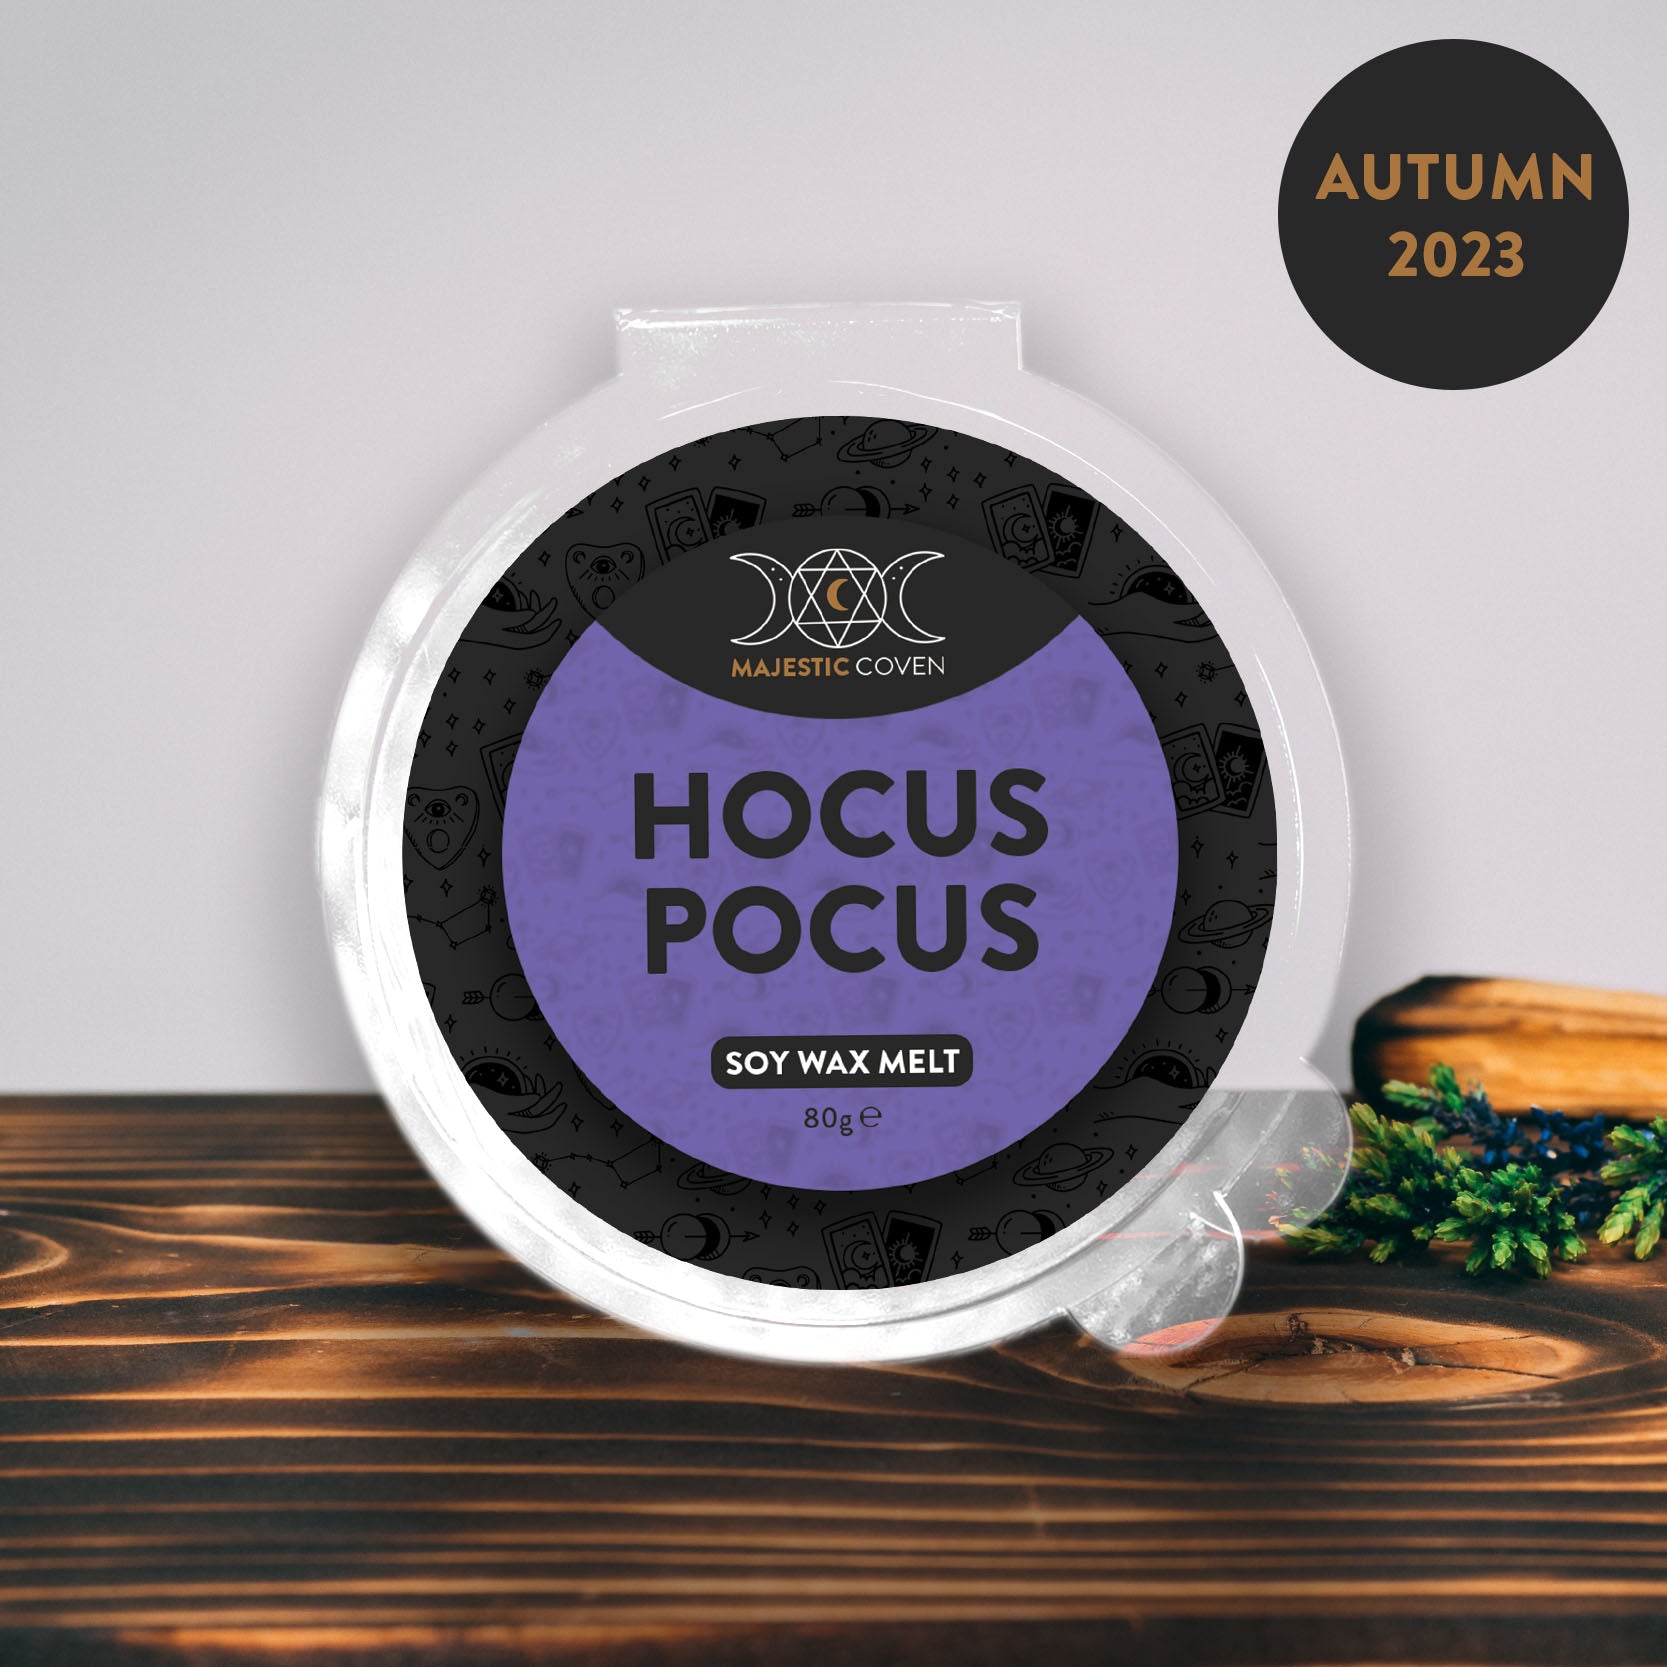 Hocus Pocus - Soy Wax Melt 80g Segment Pot Majestic Coven